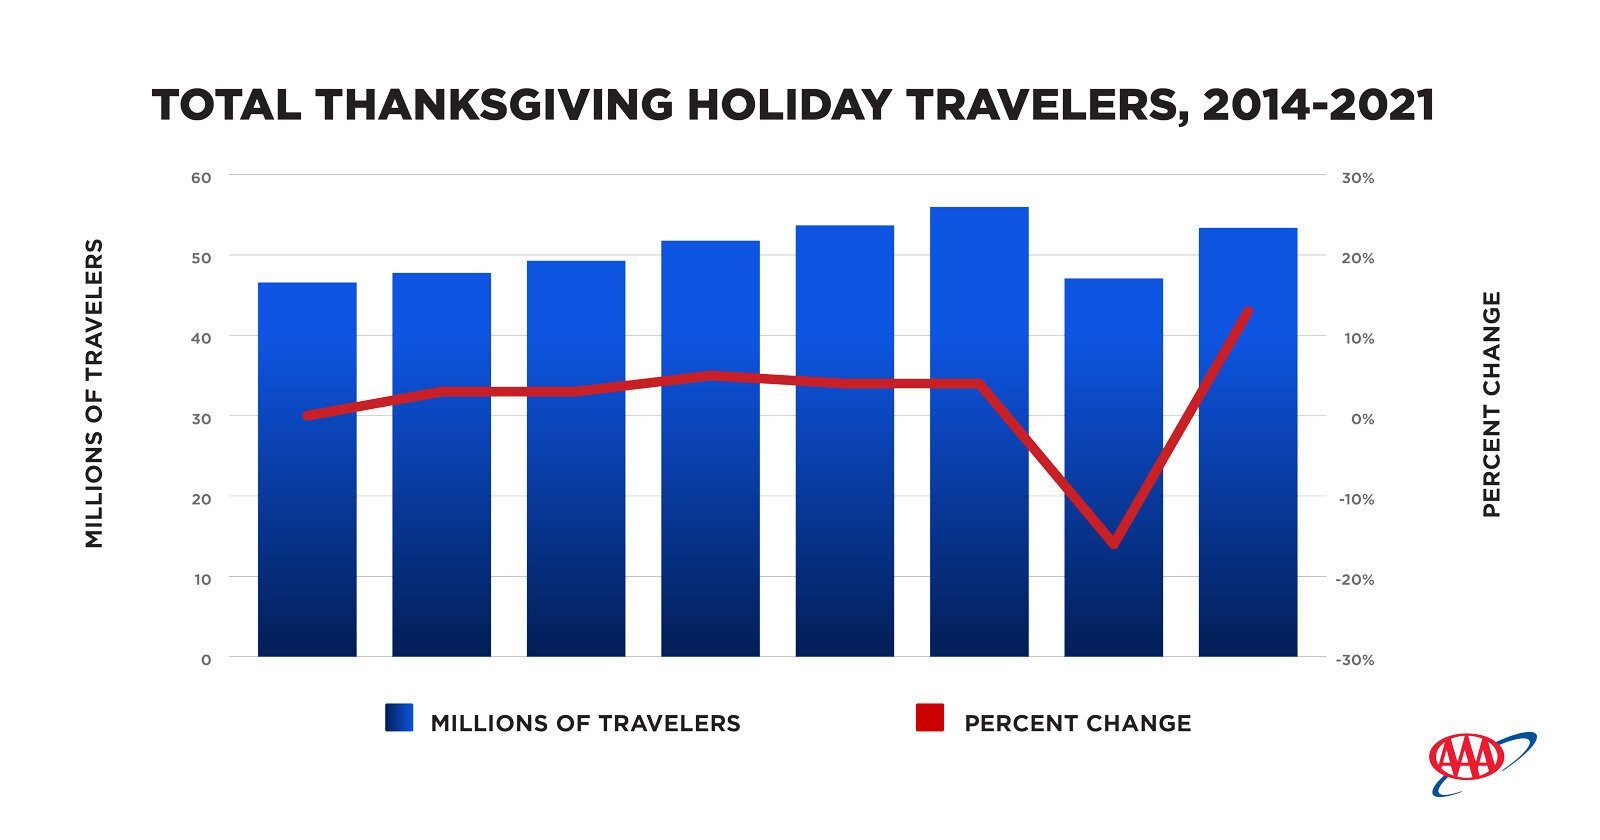 https://www.worldpropertyjournal.com/news-assets/Total-Thanksgiving-Holiday-Travelers-2014-2021.jpg